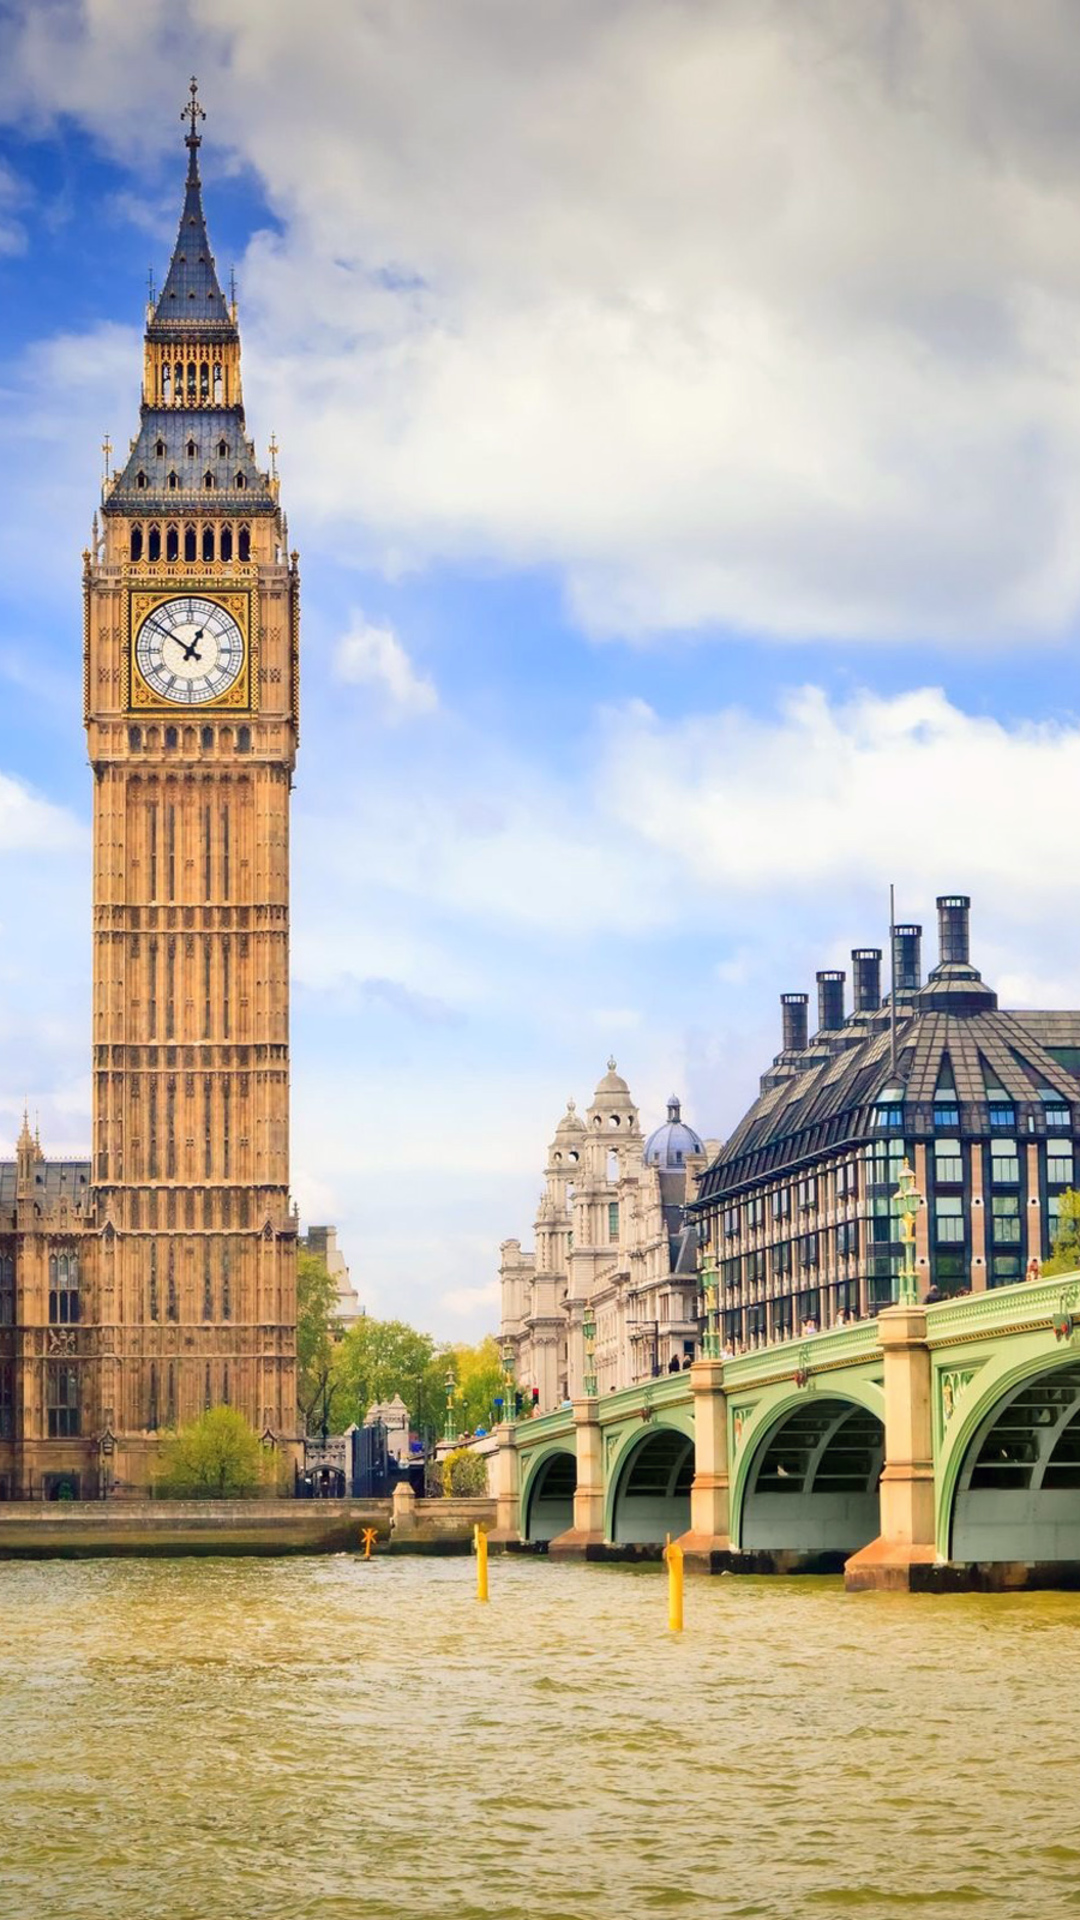 london wallpaper hd iphone,landmark,clock tower,tower,building,city